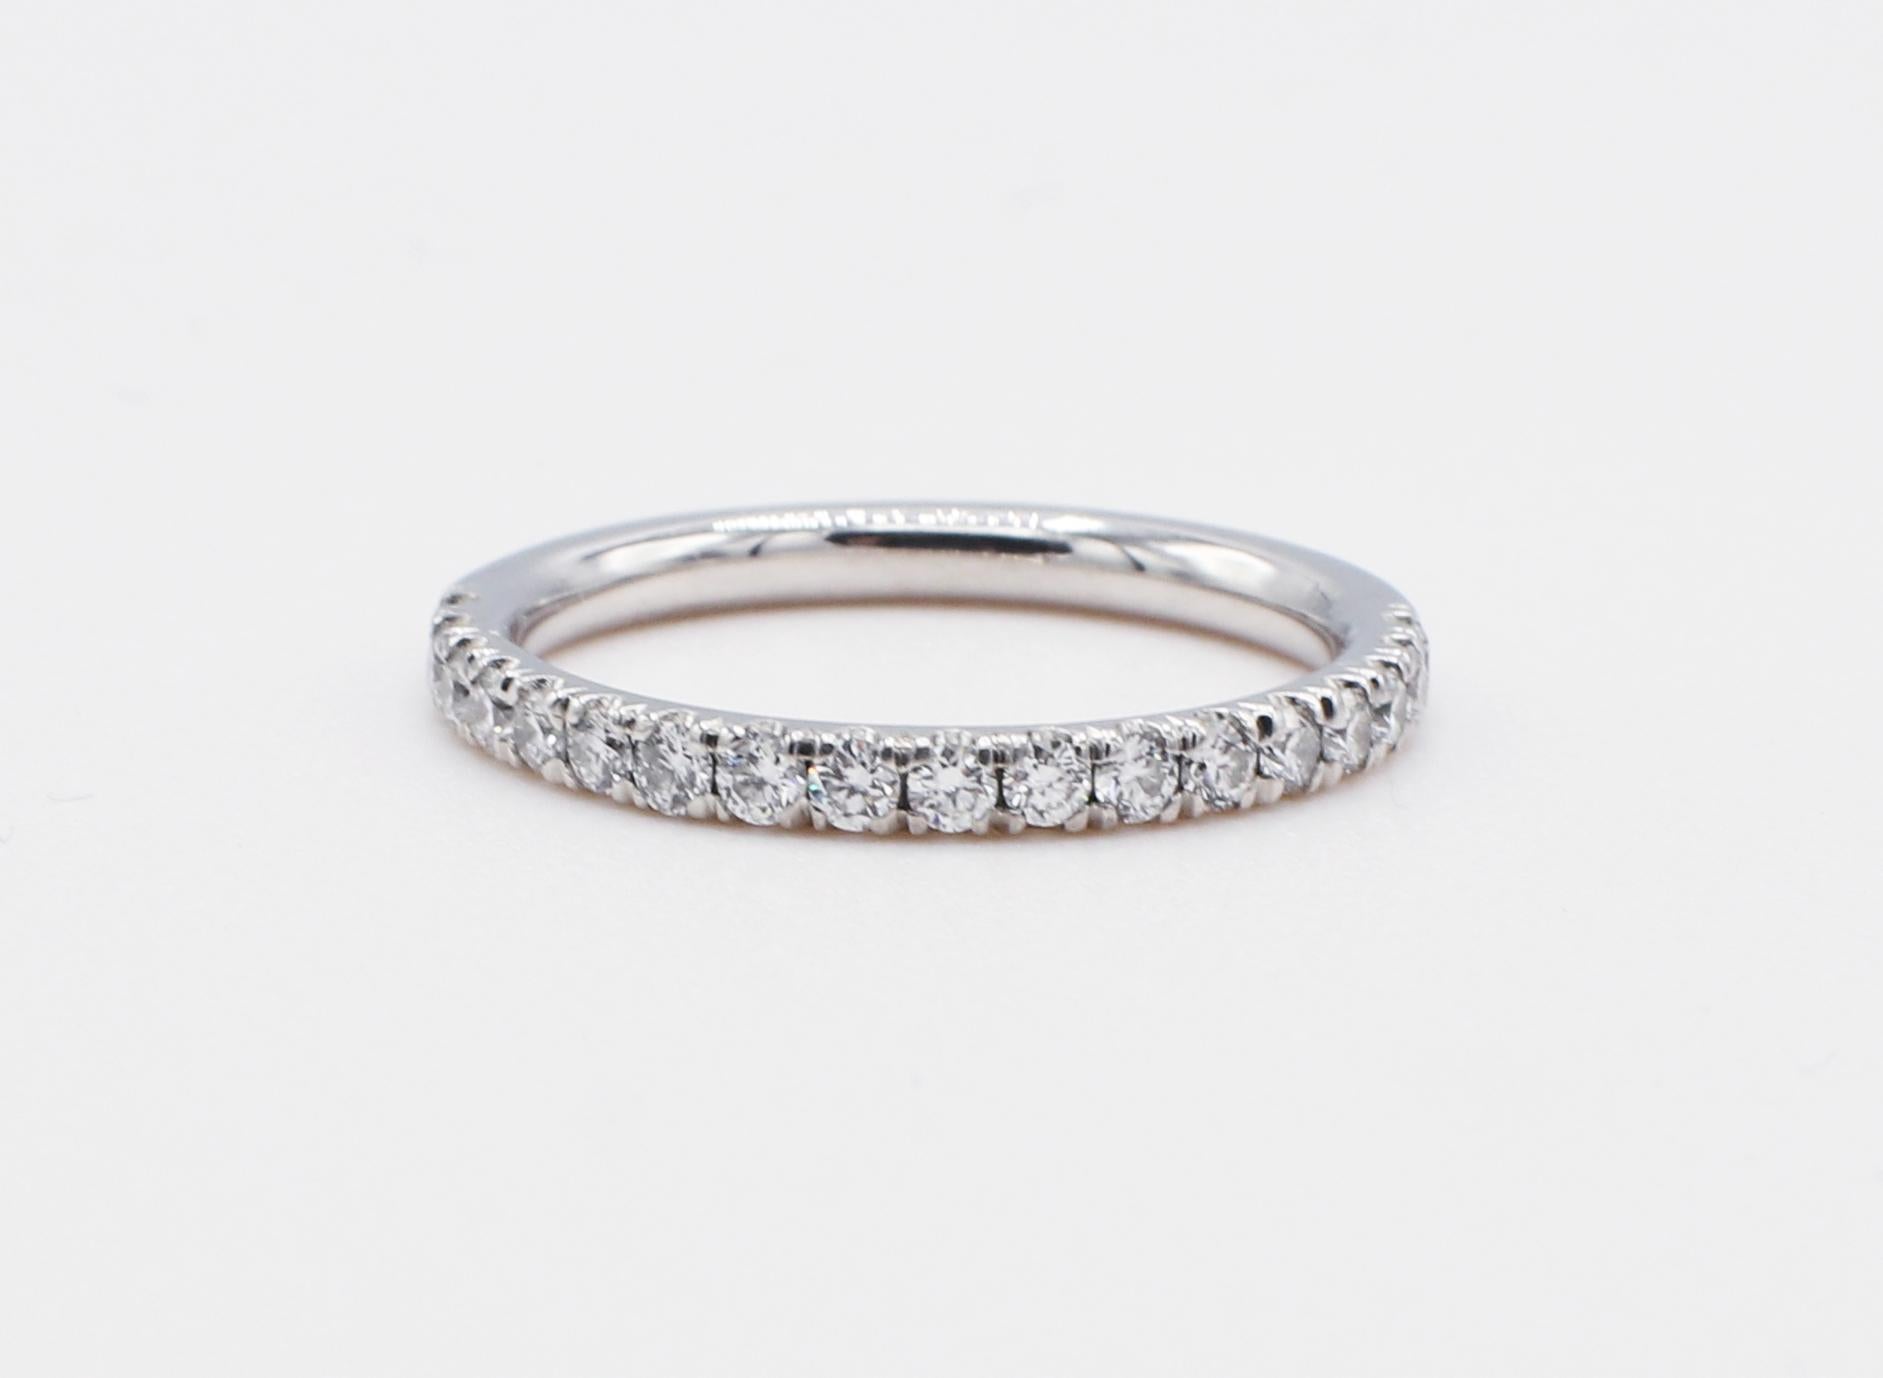 Platinum 0.55 Carat Diamond Half Wedding Band Ring Size 6.5 
Metal: Platinum
Weight: 3.72 grams
Diamonds: Approx. .55 CTW G VS round diamonds
Size: 6.5 (US)
Band is 2mm wide 
